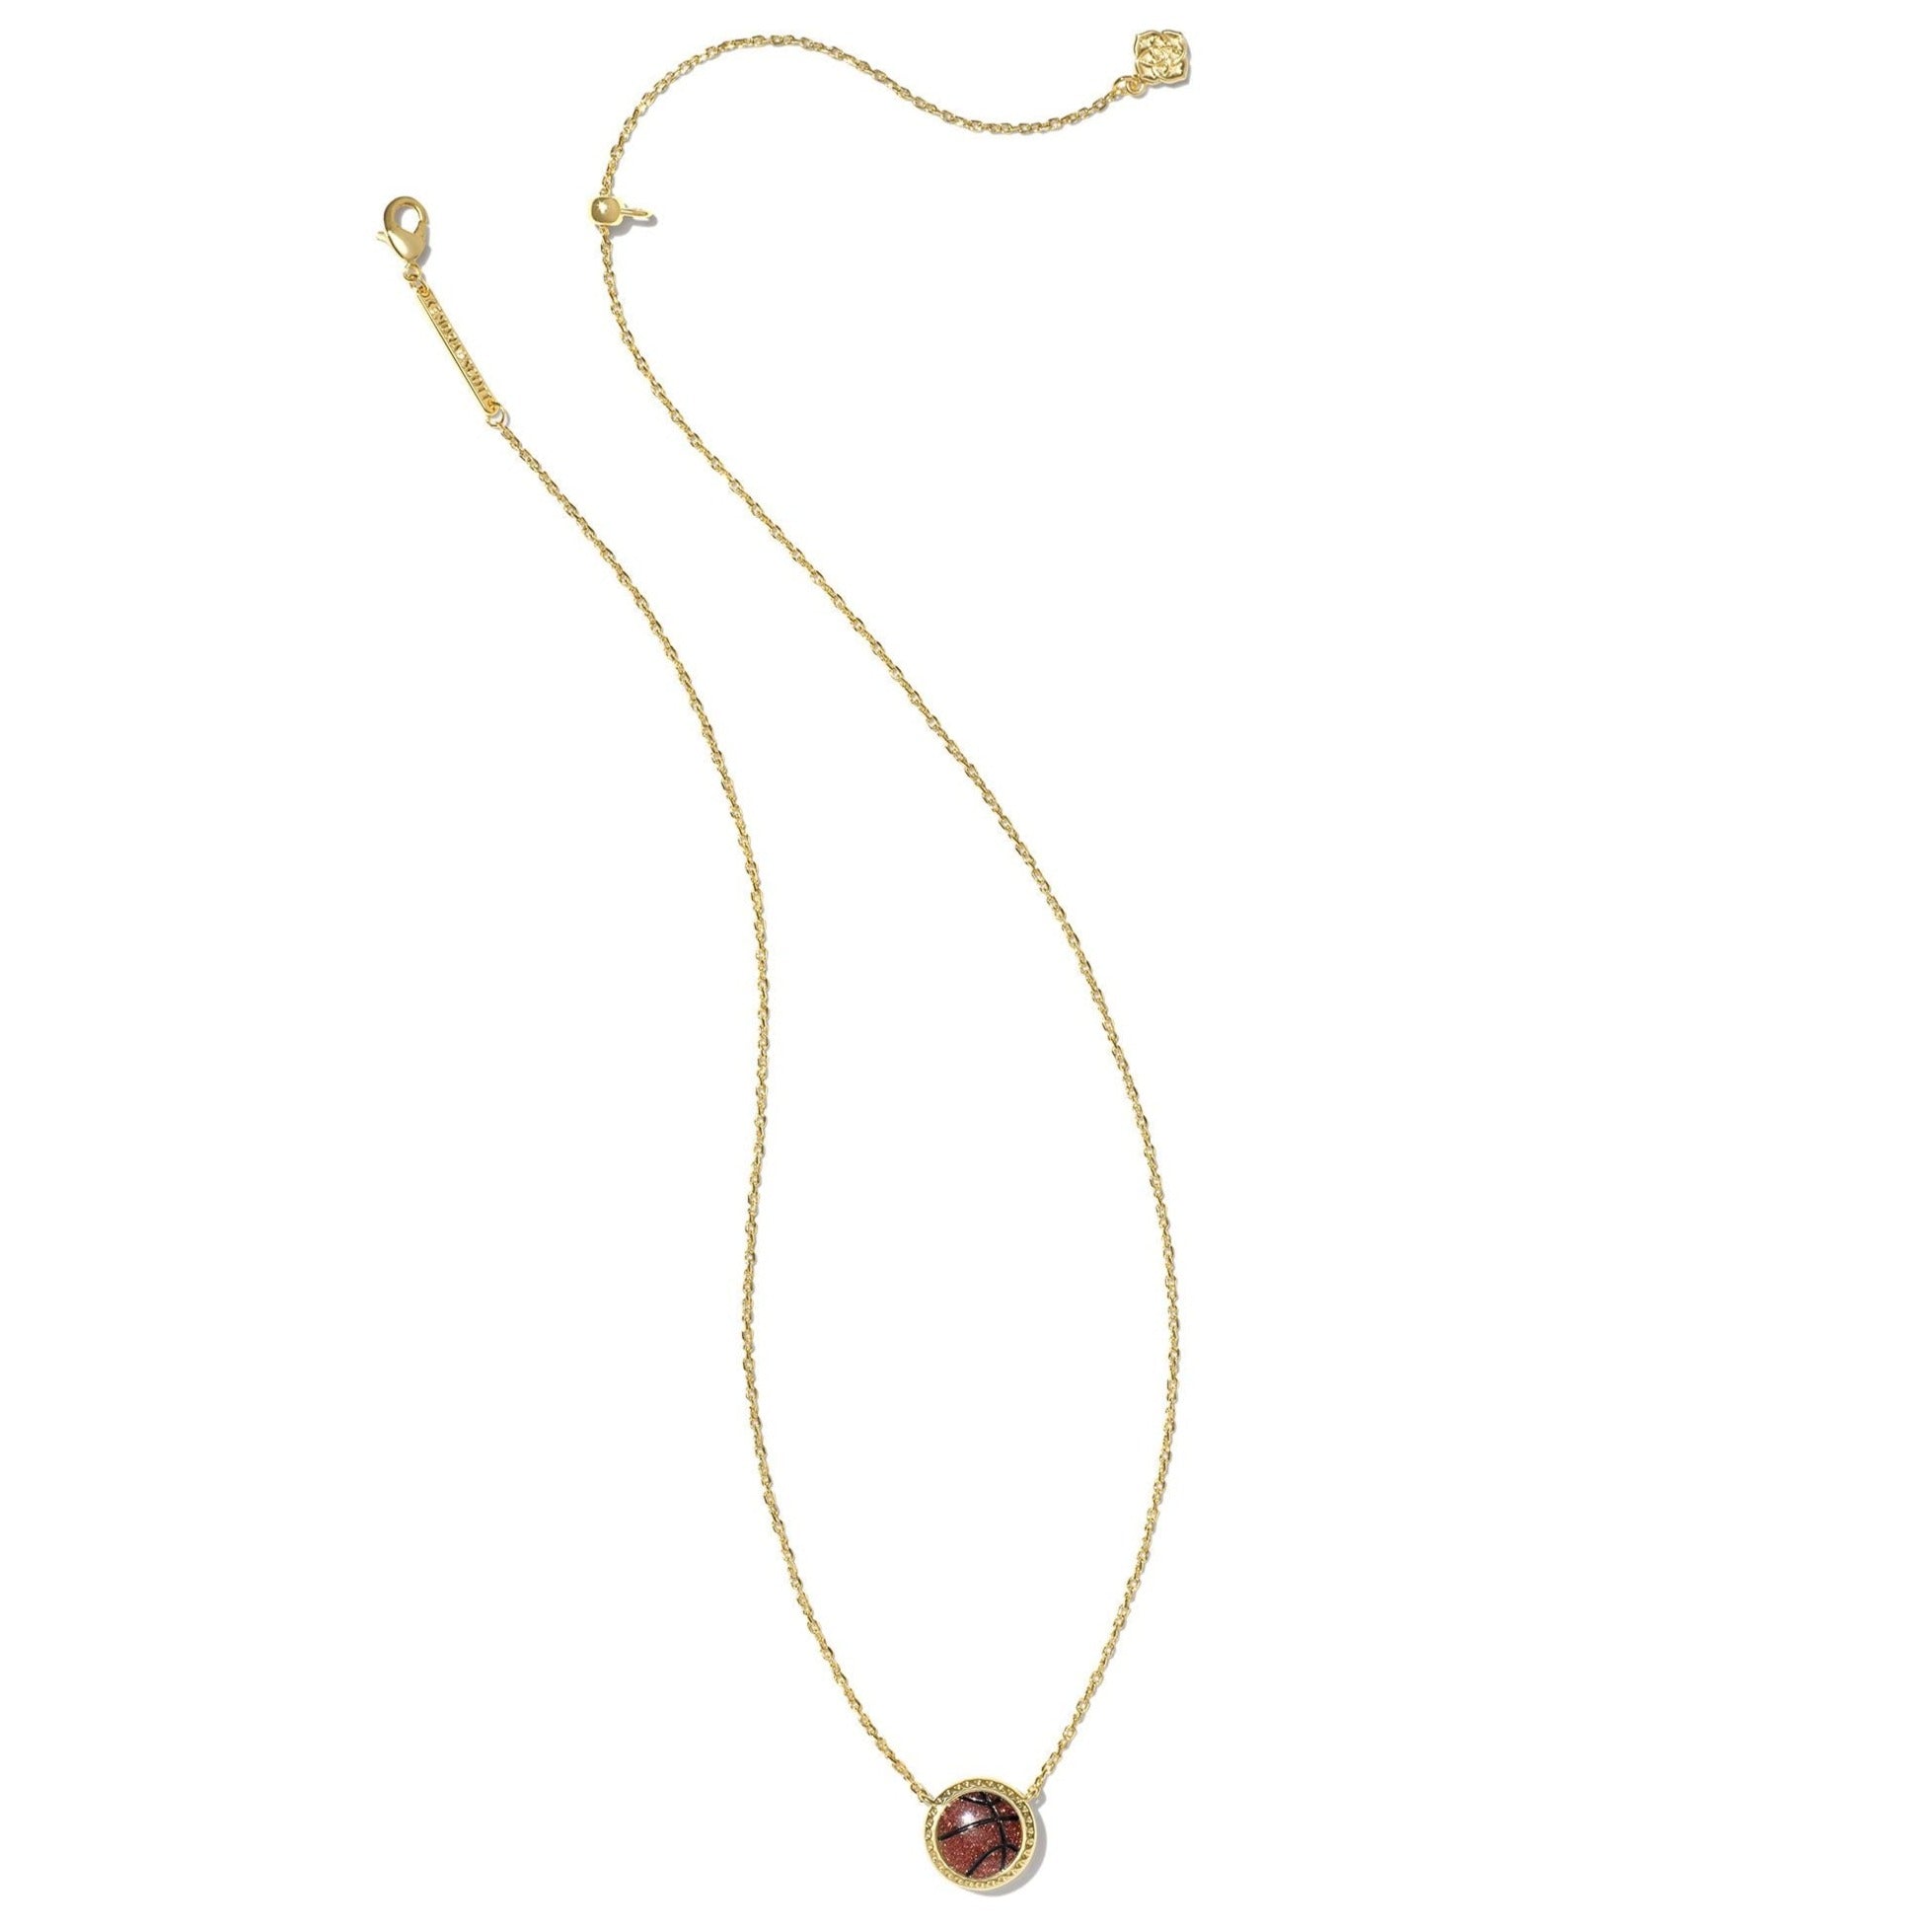 Kendra Scott | Basketball Gold Short Pendant Necklace in Orange Goldstone - Giddy Up Glamour Boutique